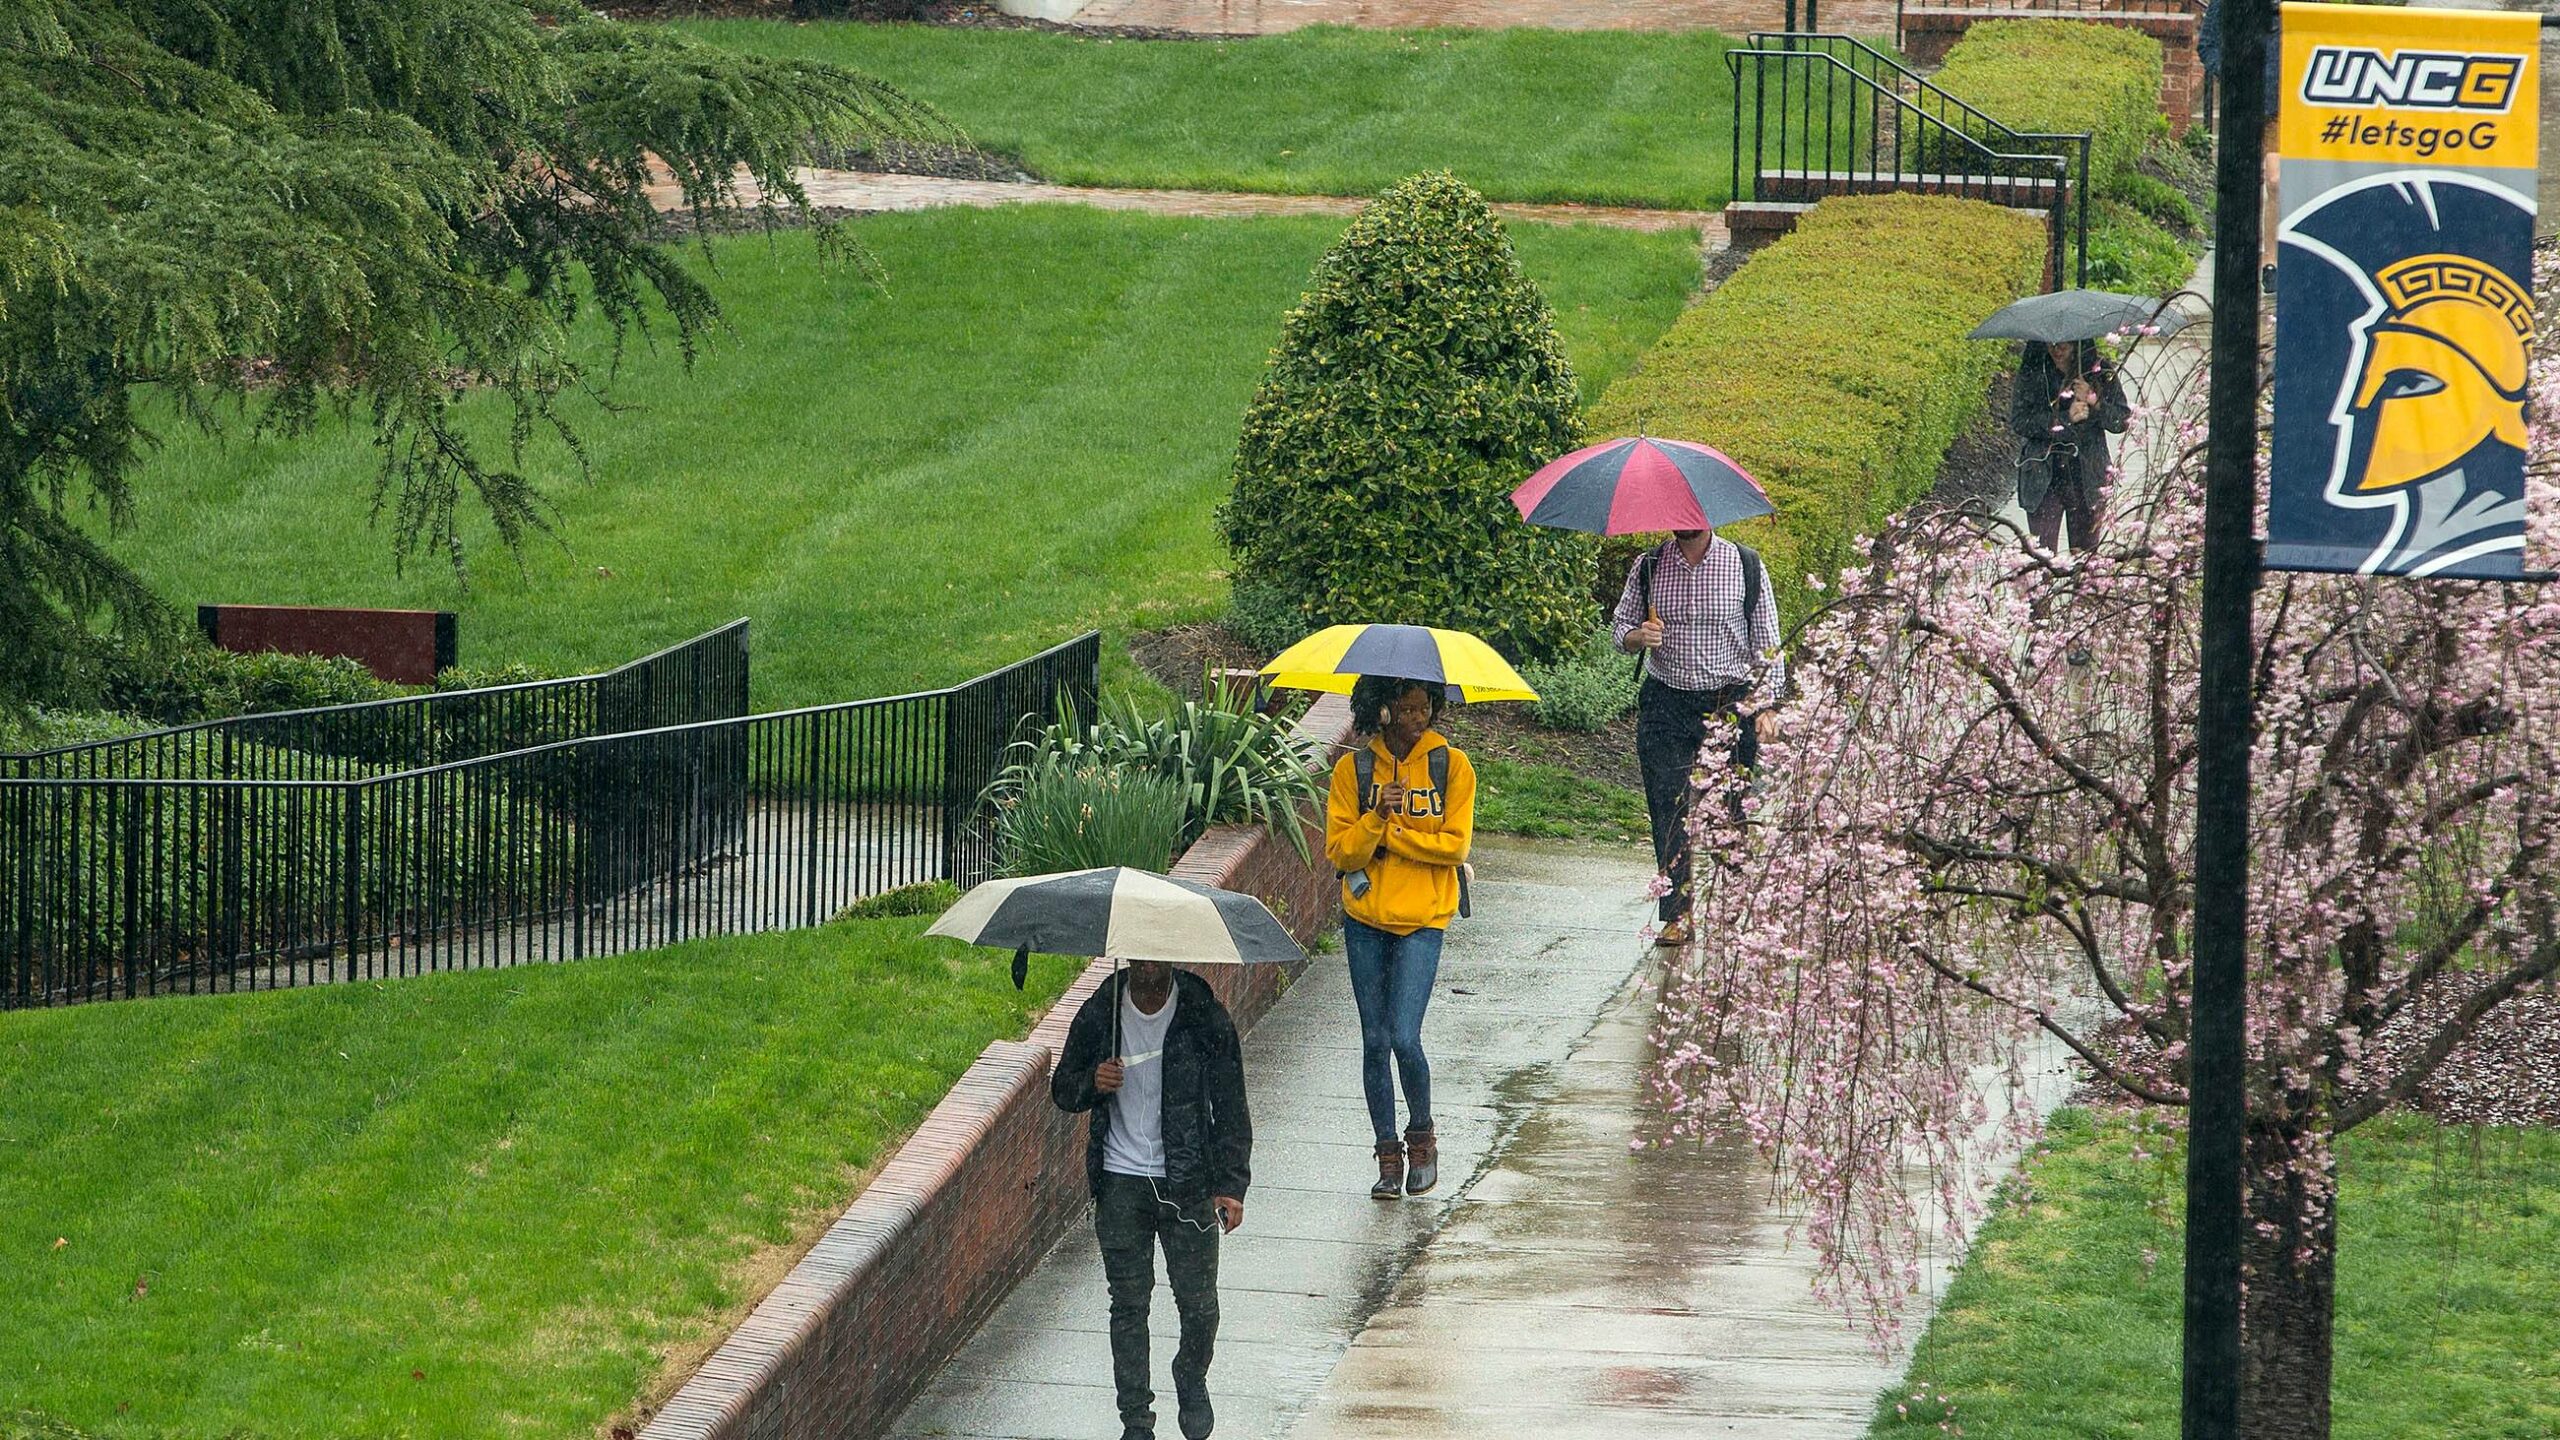 UNCG students walking in the rain.